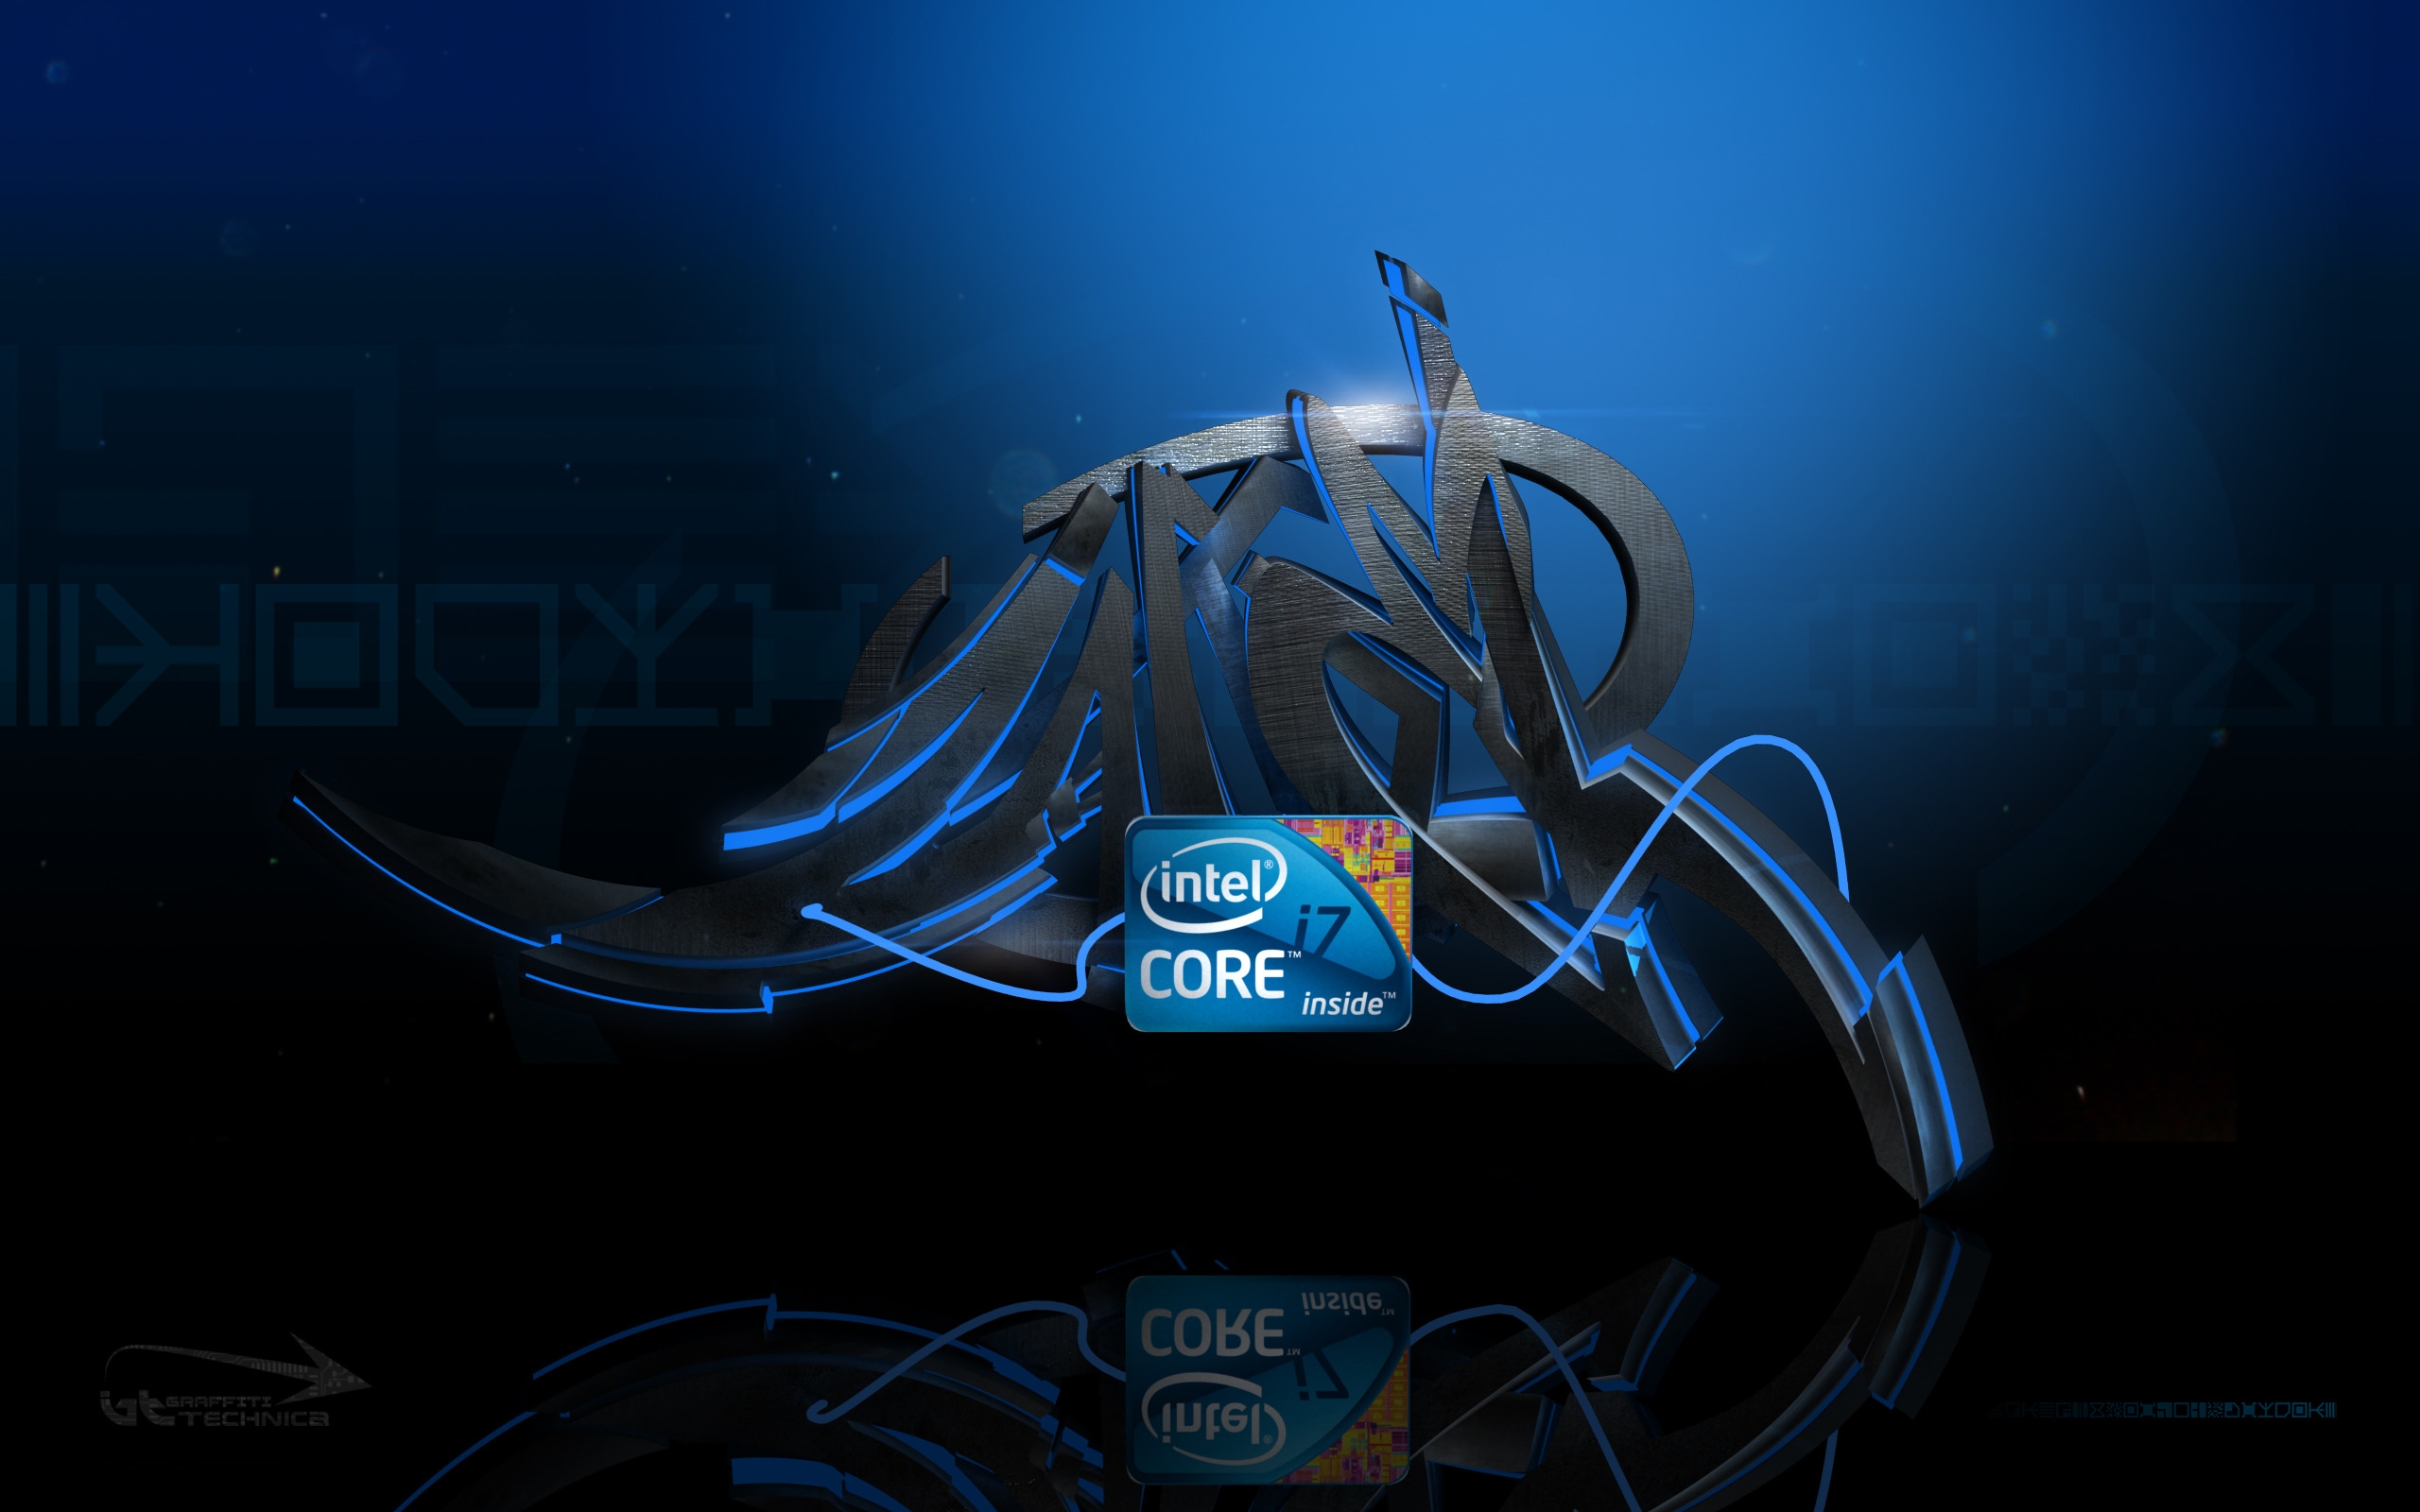 Intel i7 Graffiti for 2560 x 1600 widescreen resolution